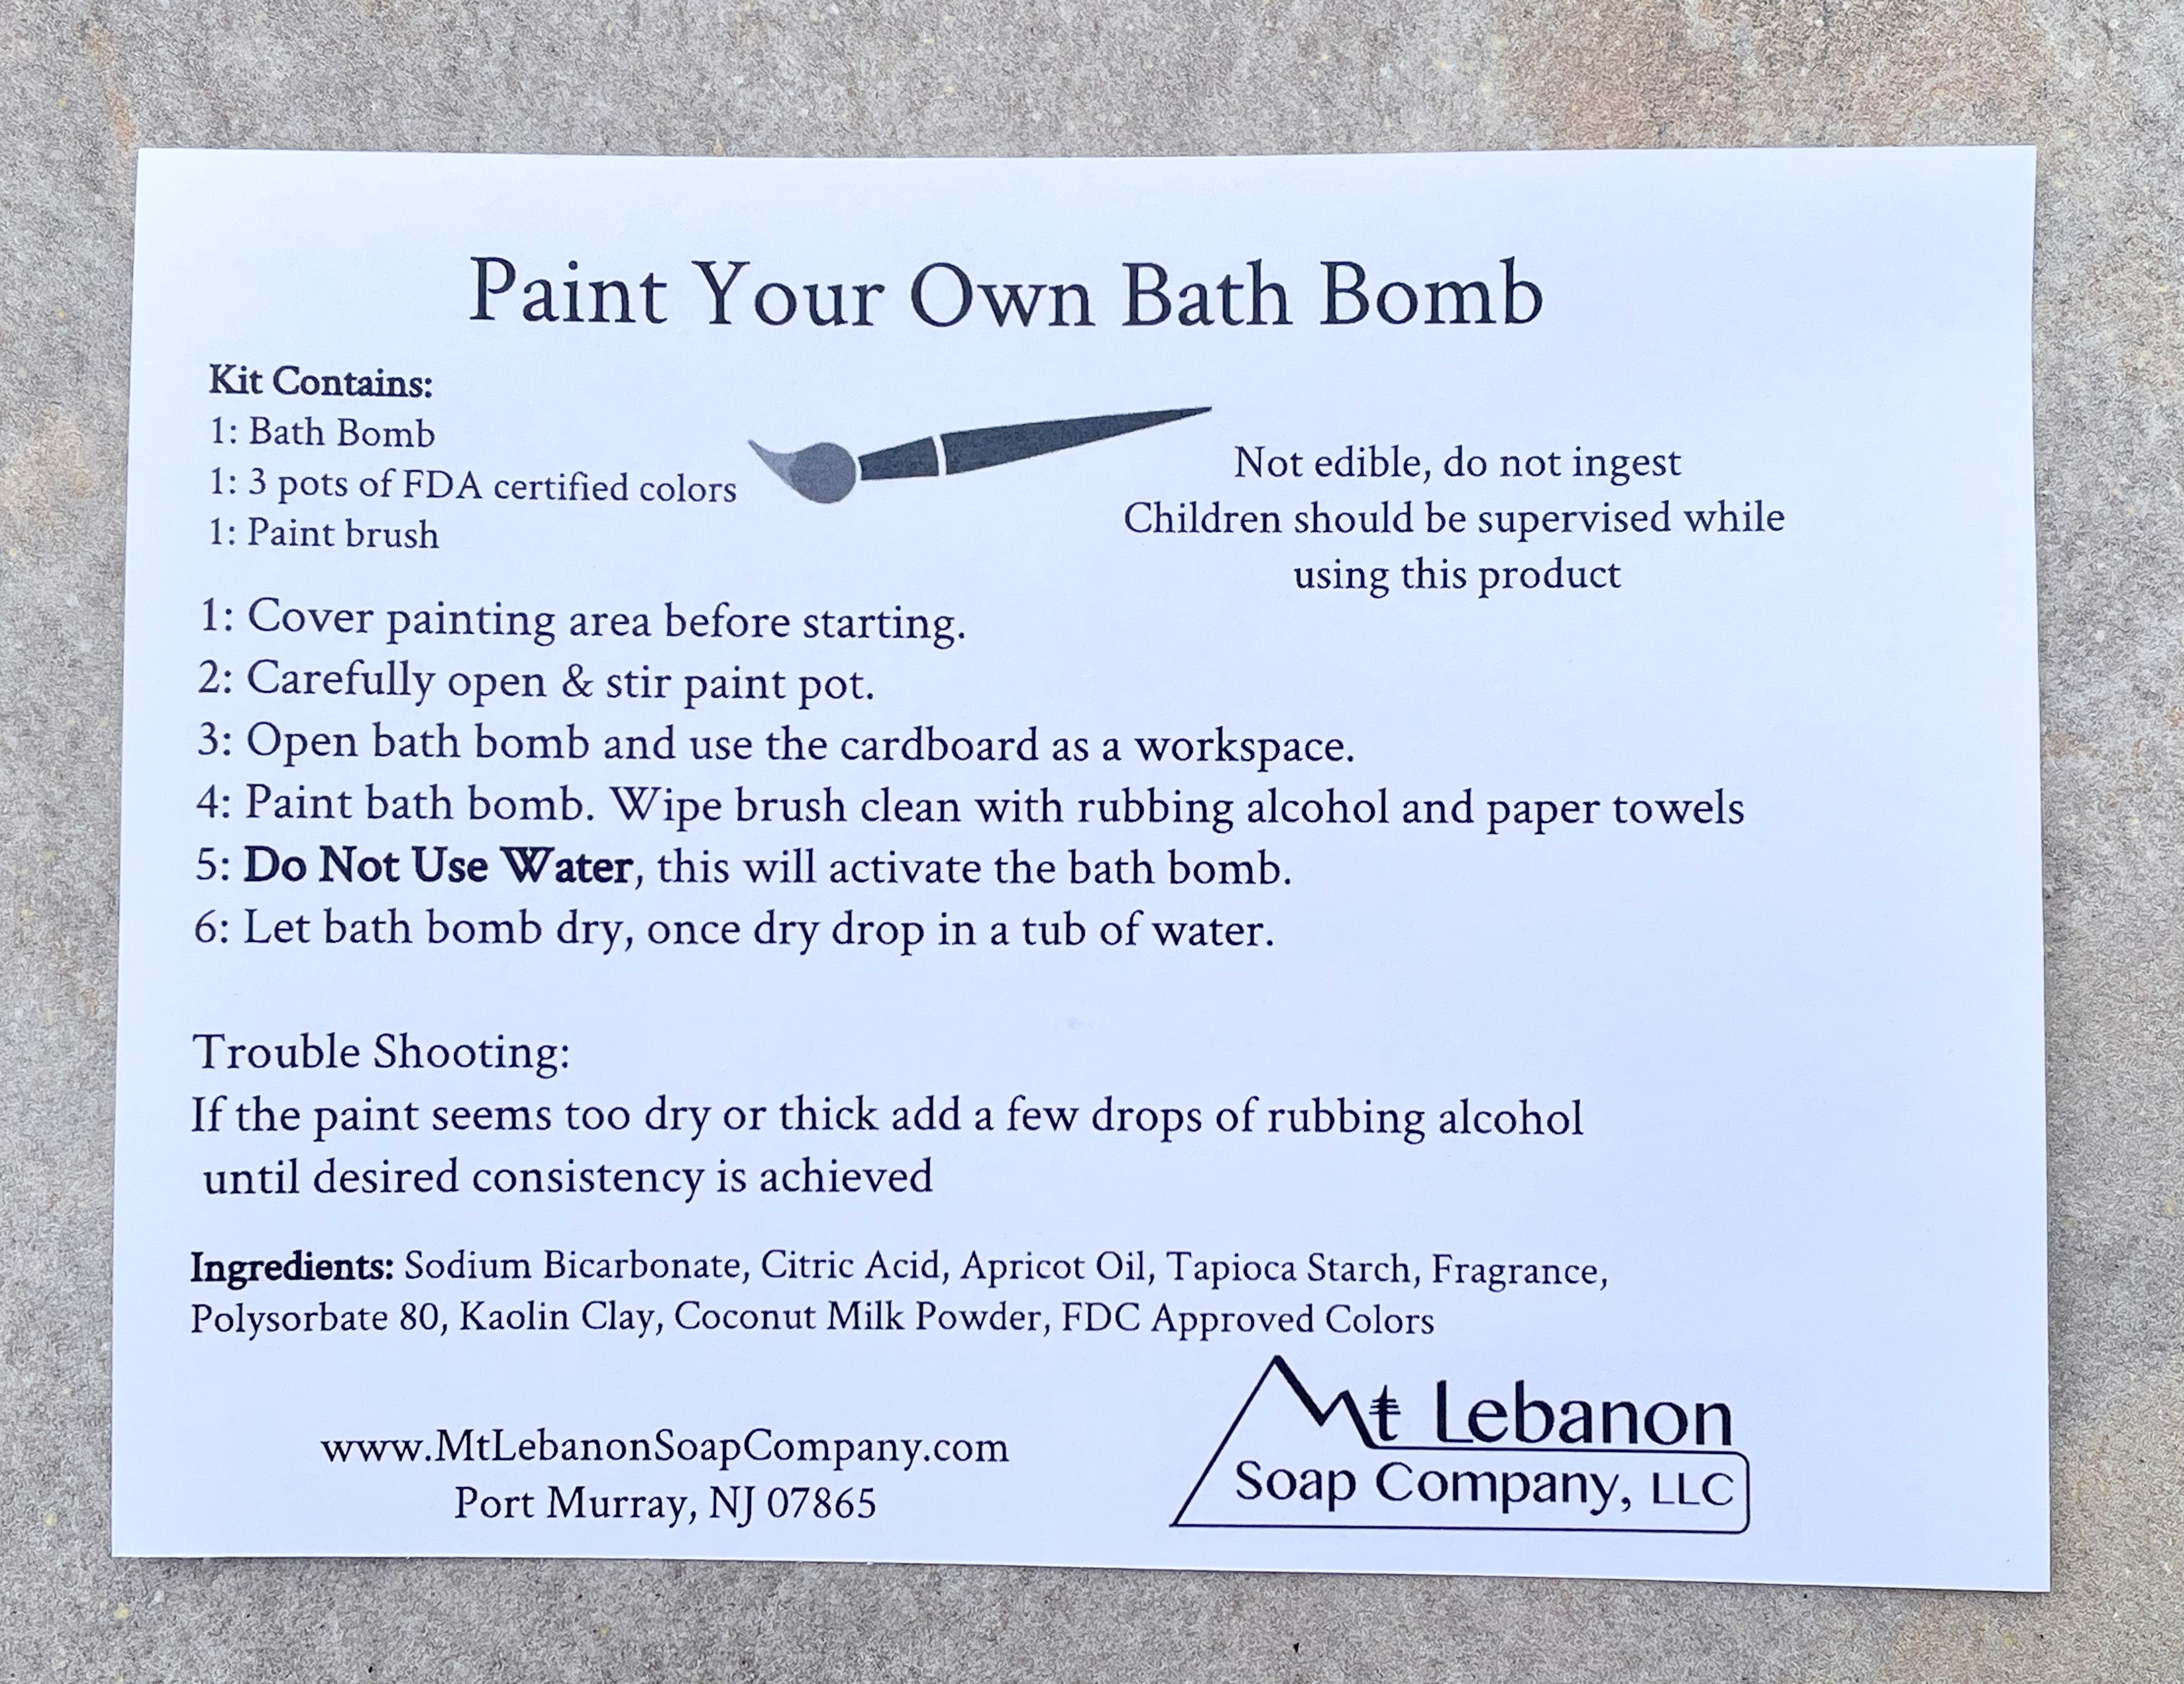 Valentine’s Day Bath Bomb Kit - Paint Your Own Bath Bomb